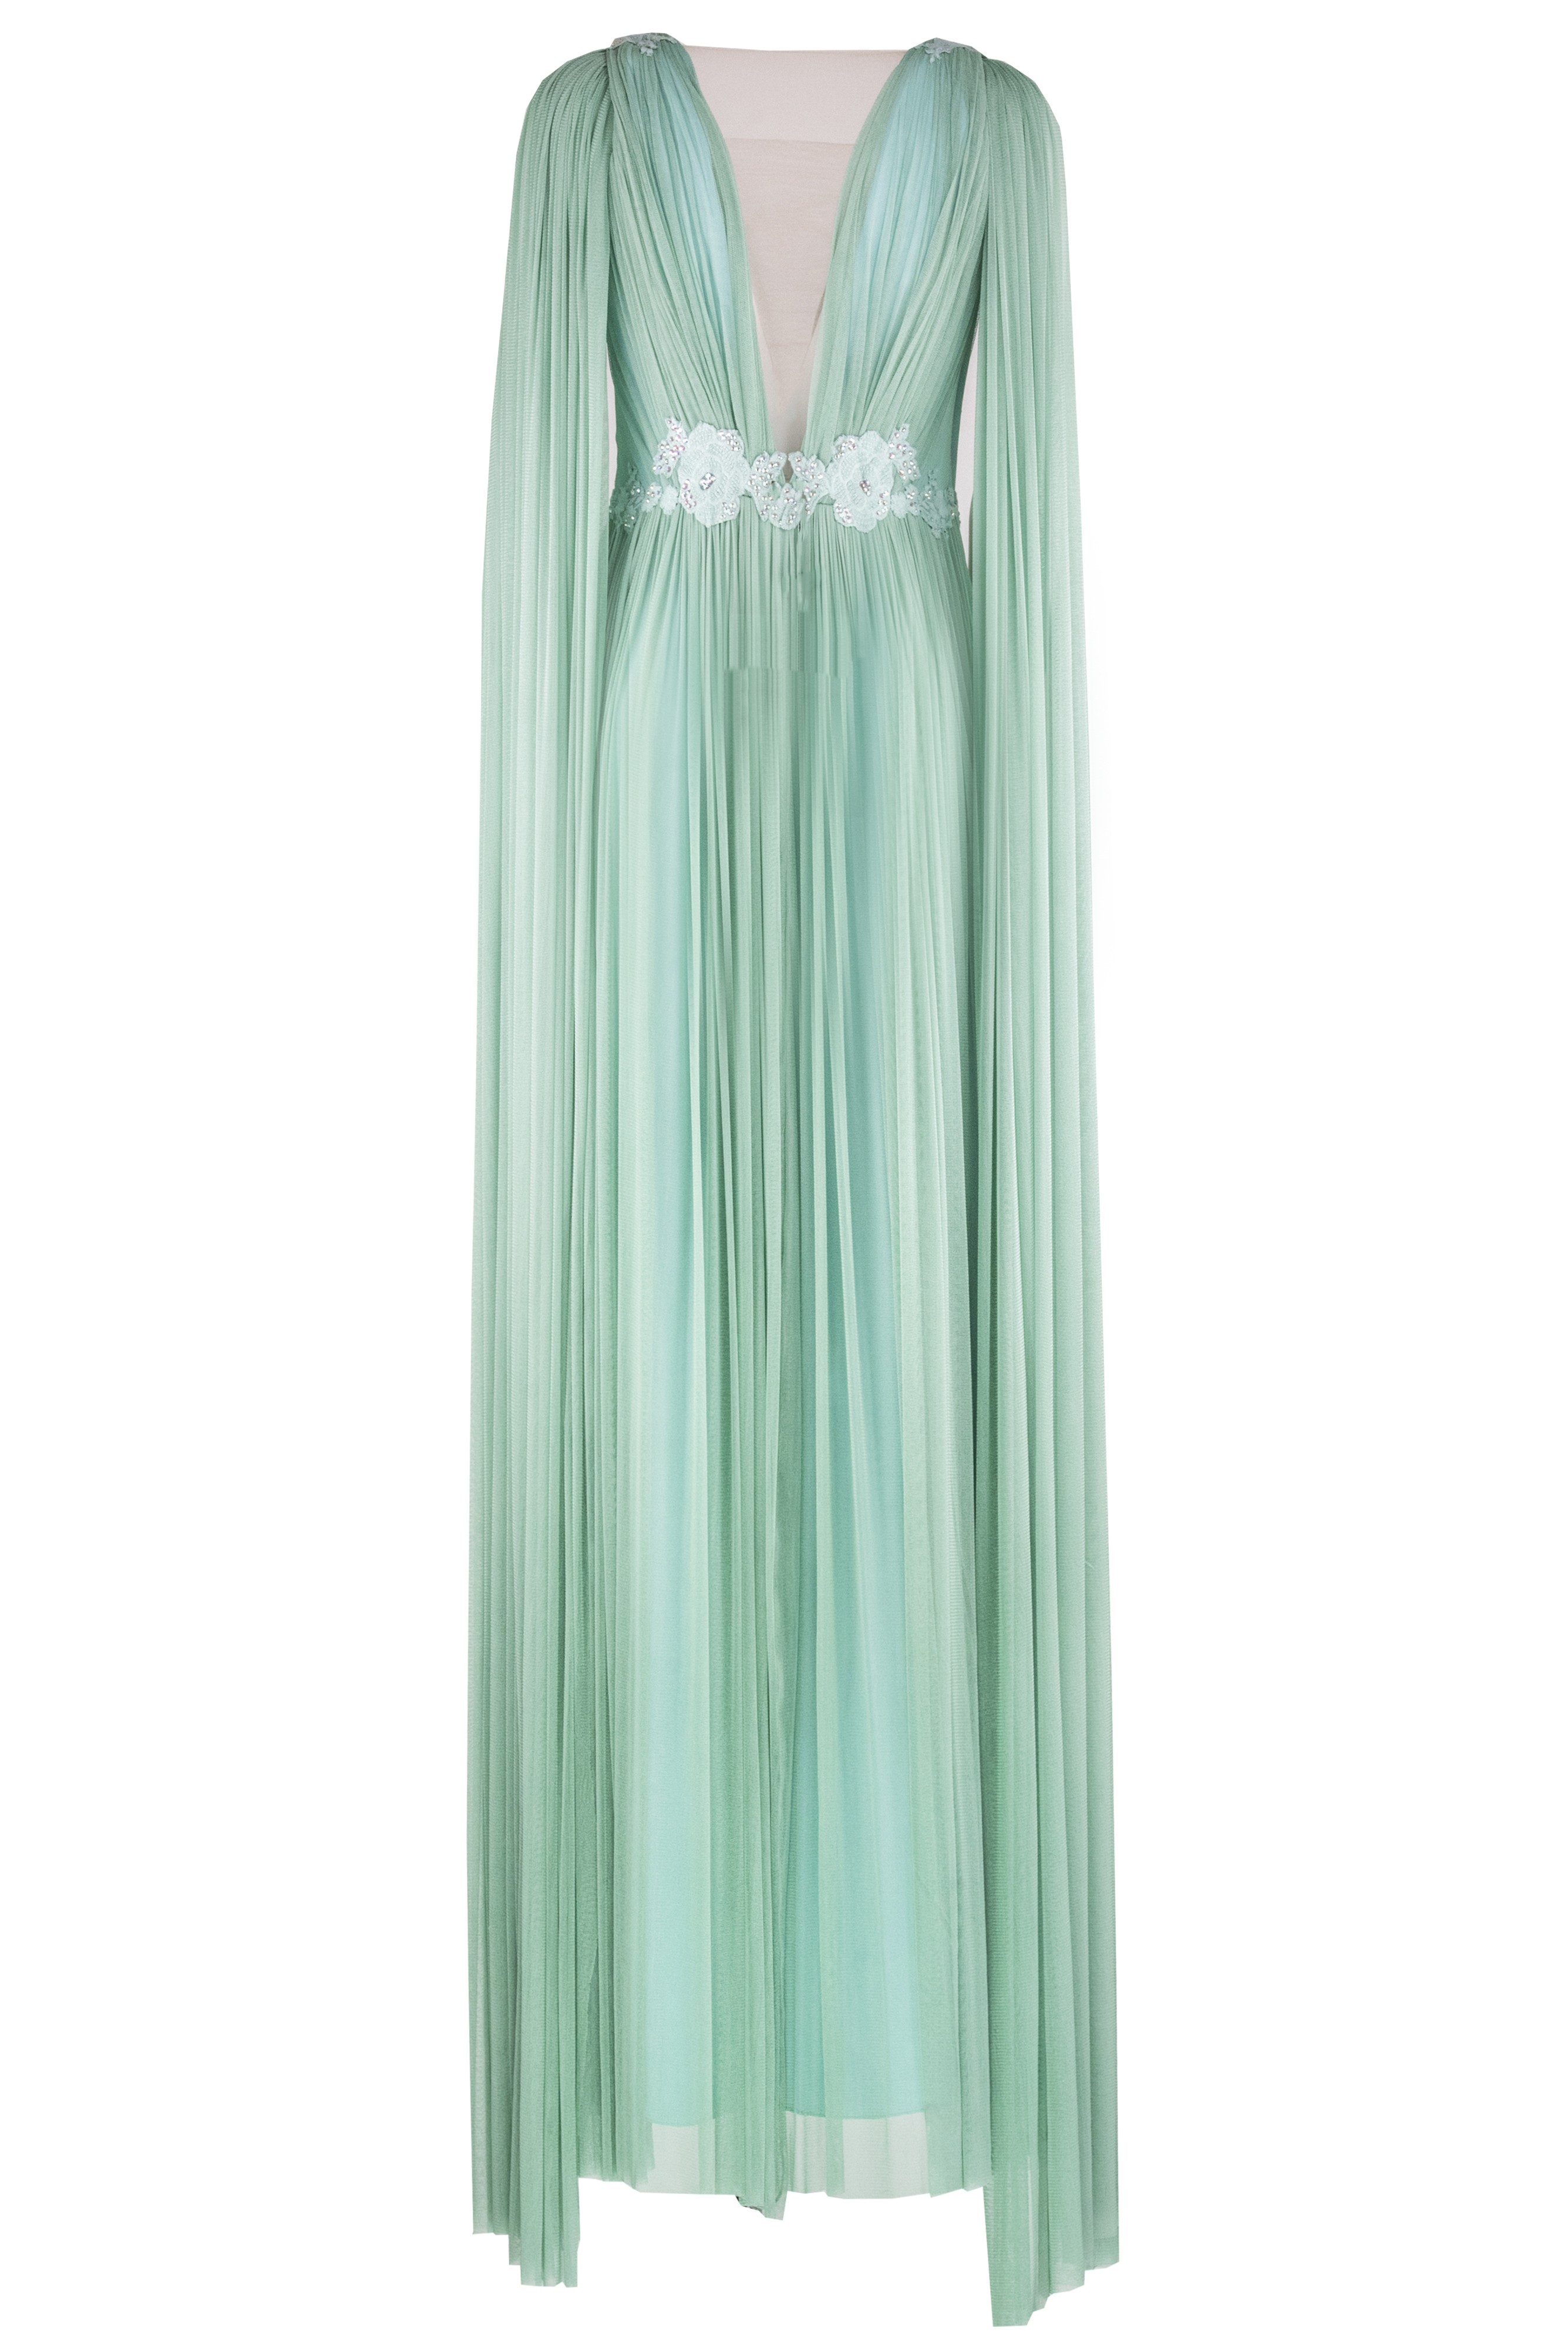 Rhea Costa Dress 20210D LG EMB - New Season Spring Summer 2020